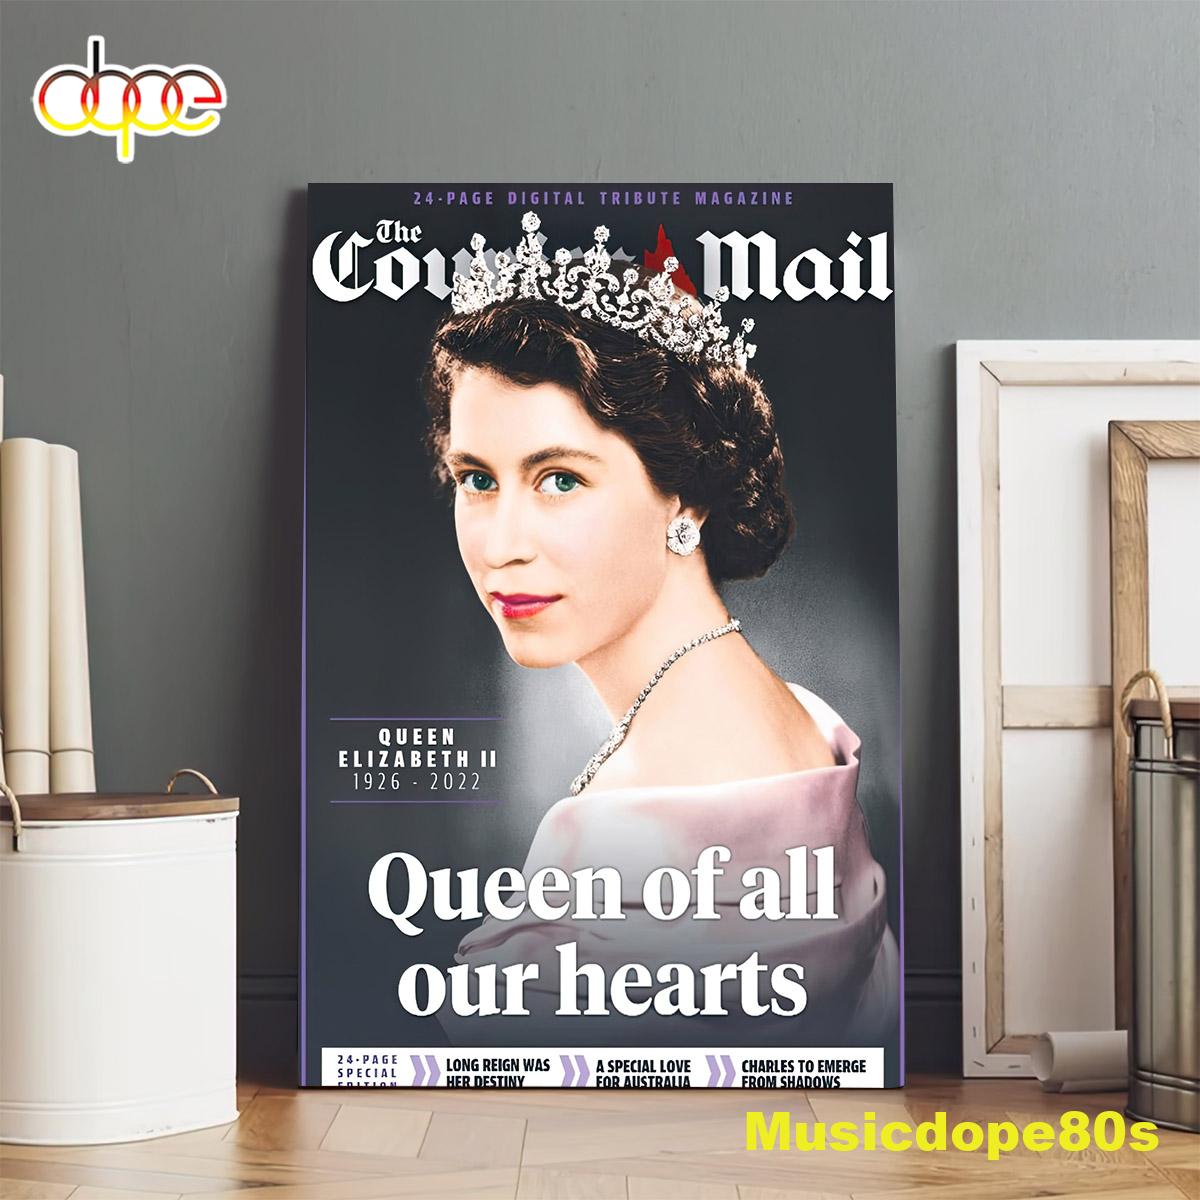 Queen Elizabeth Ii Young Queen Of All Our Hearts Poster